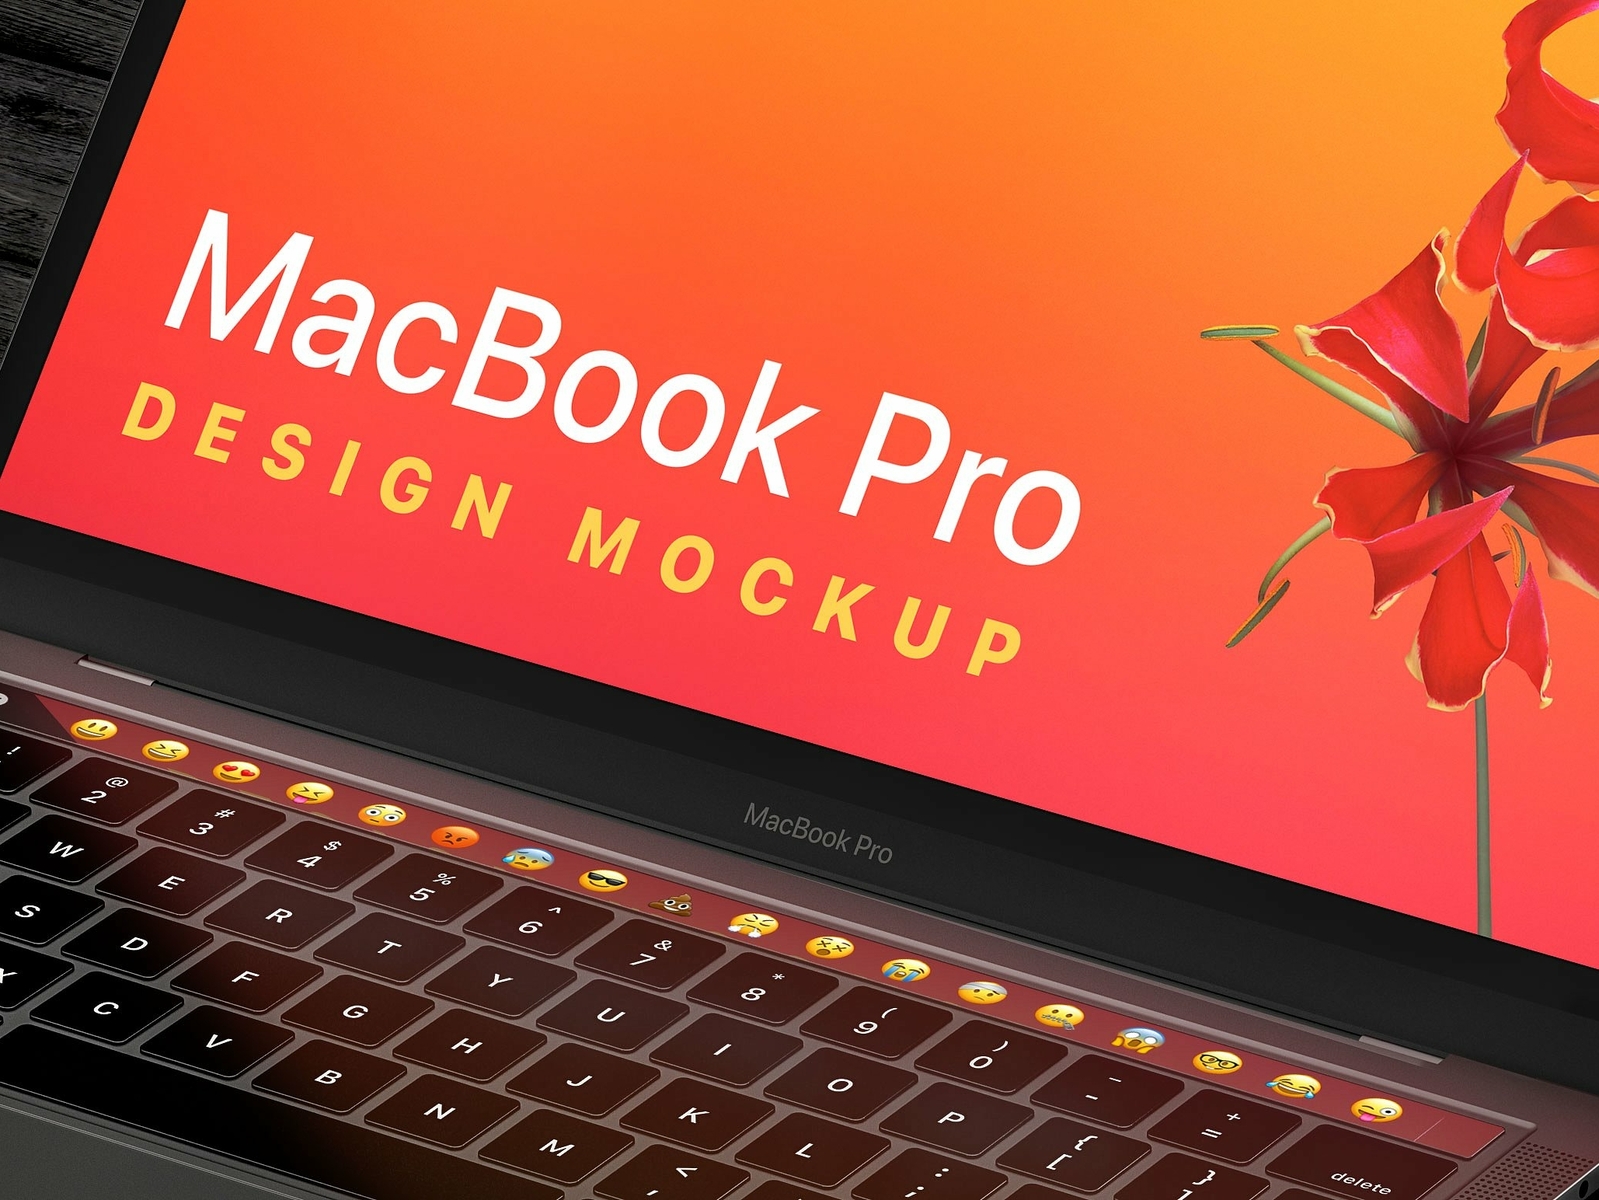 MacBook Pro/ iPhone XS Design Mockup